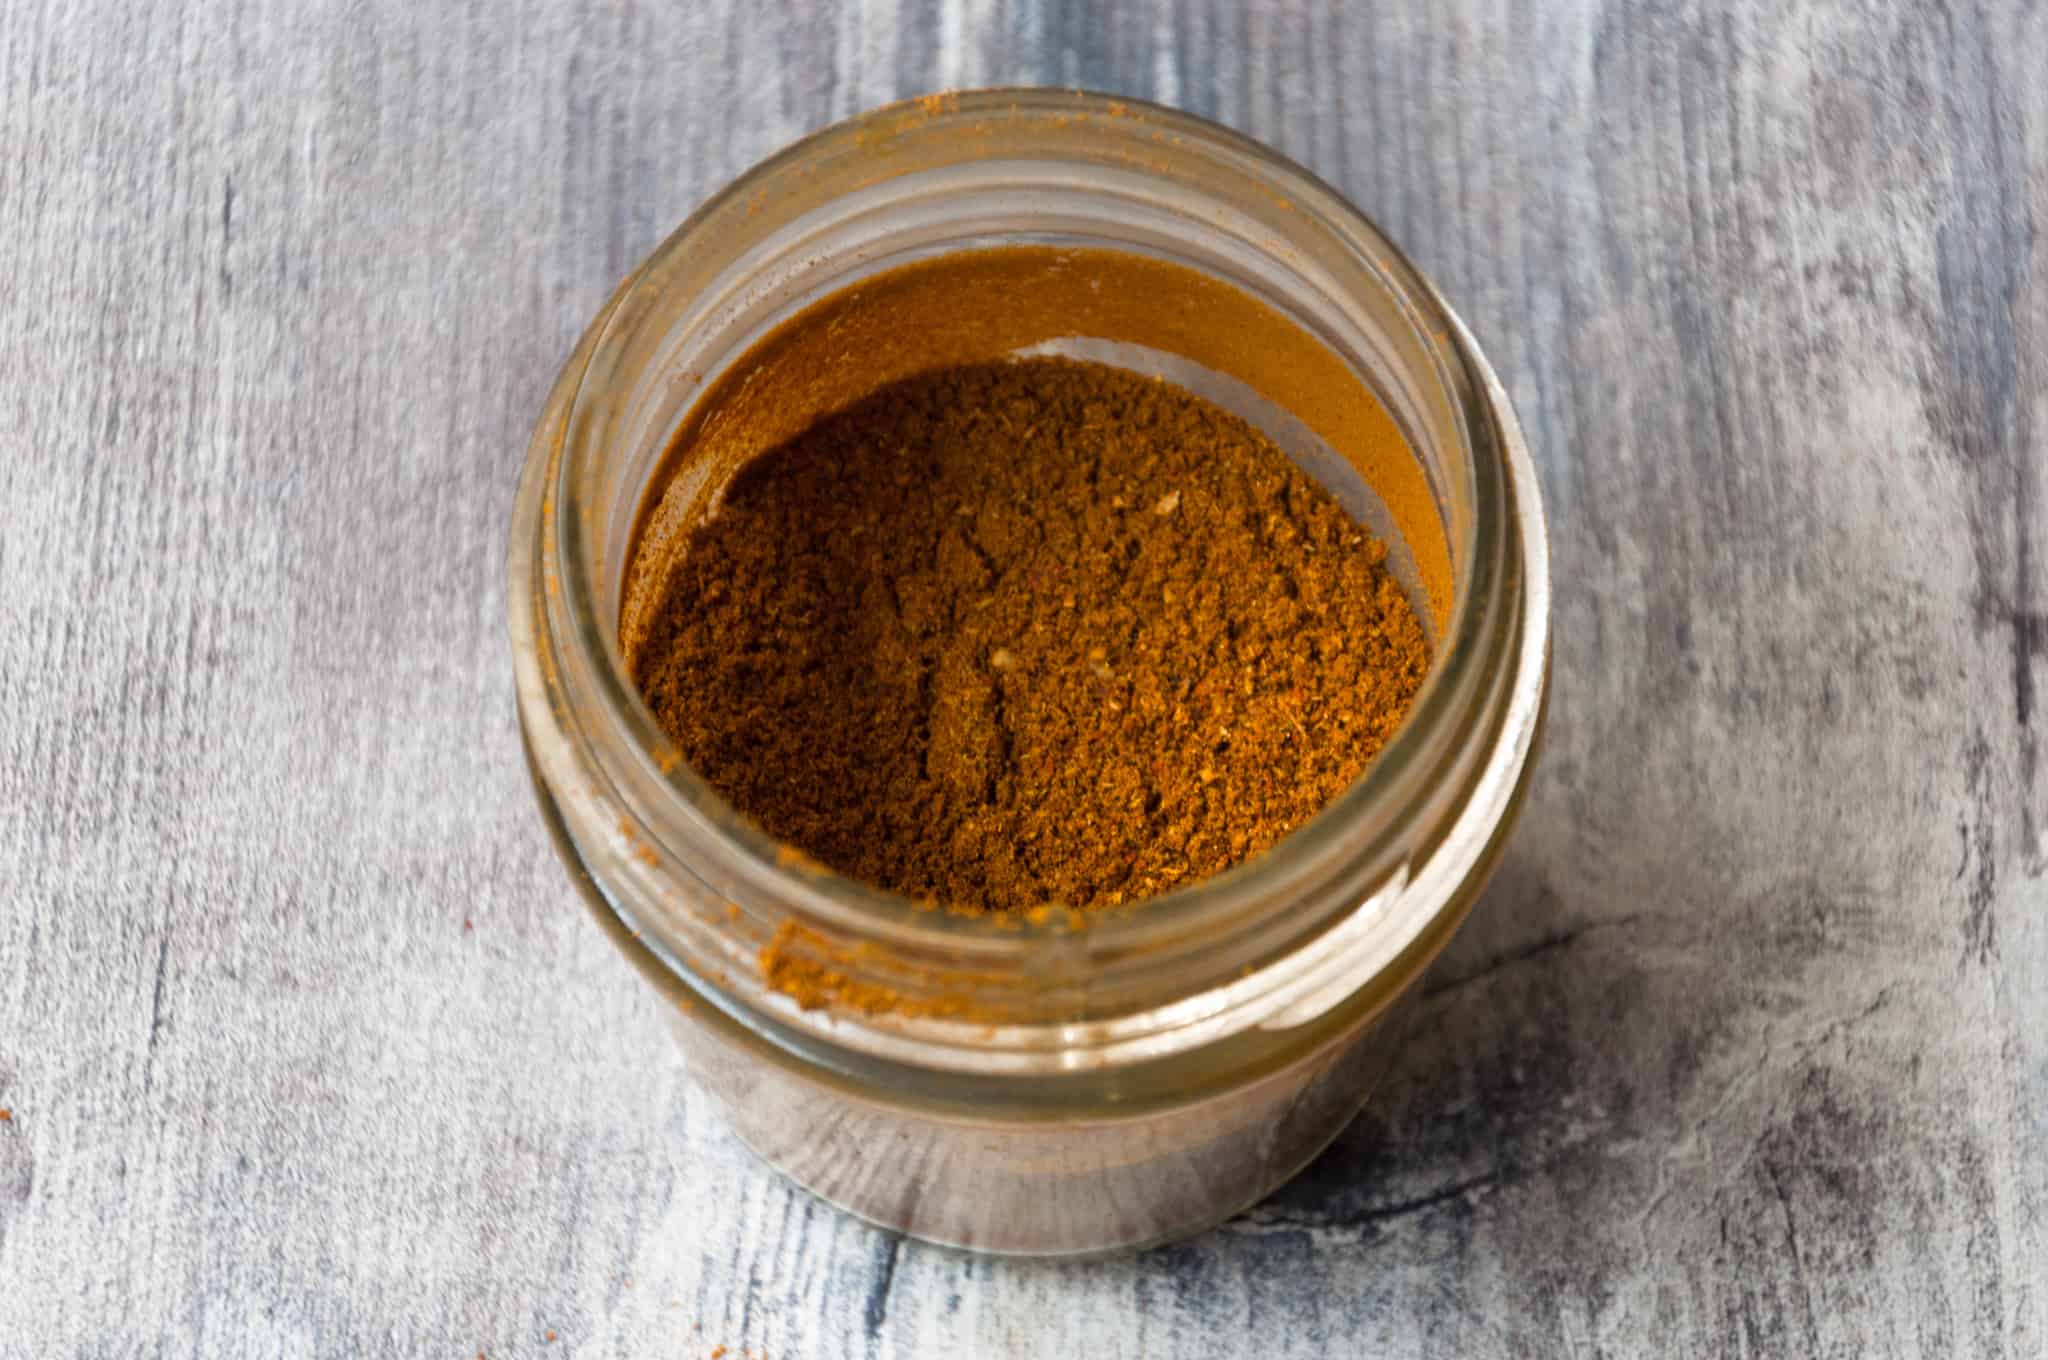 Haleem Masala Recipe or Spice Mix -